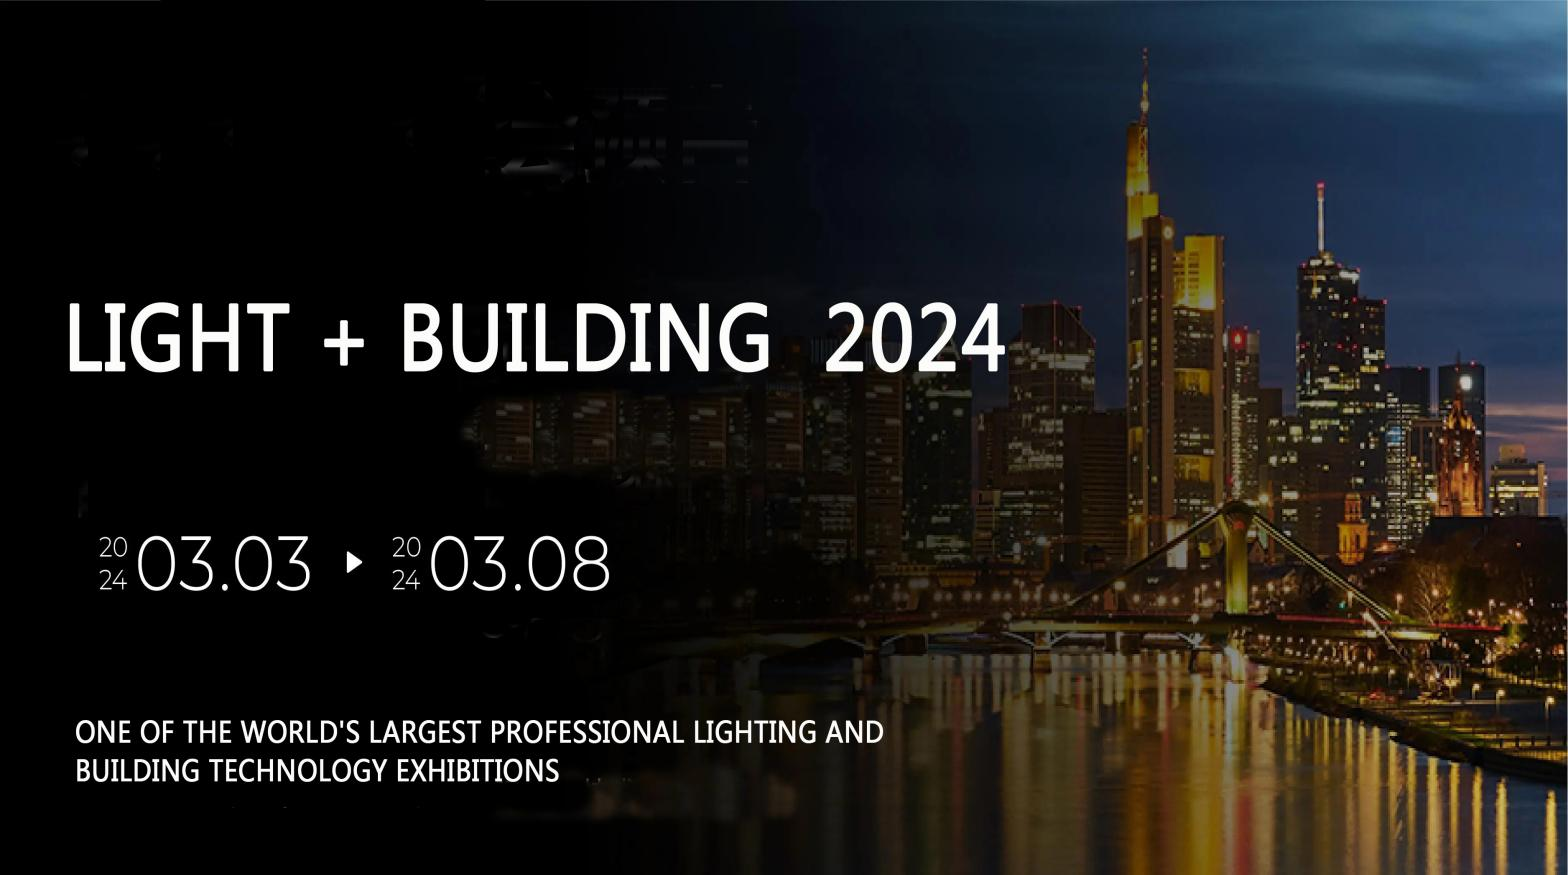 Shenghui Optoelectronics invites you to meet at the 2024 Frankfurt International Lighting and Buildi